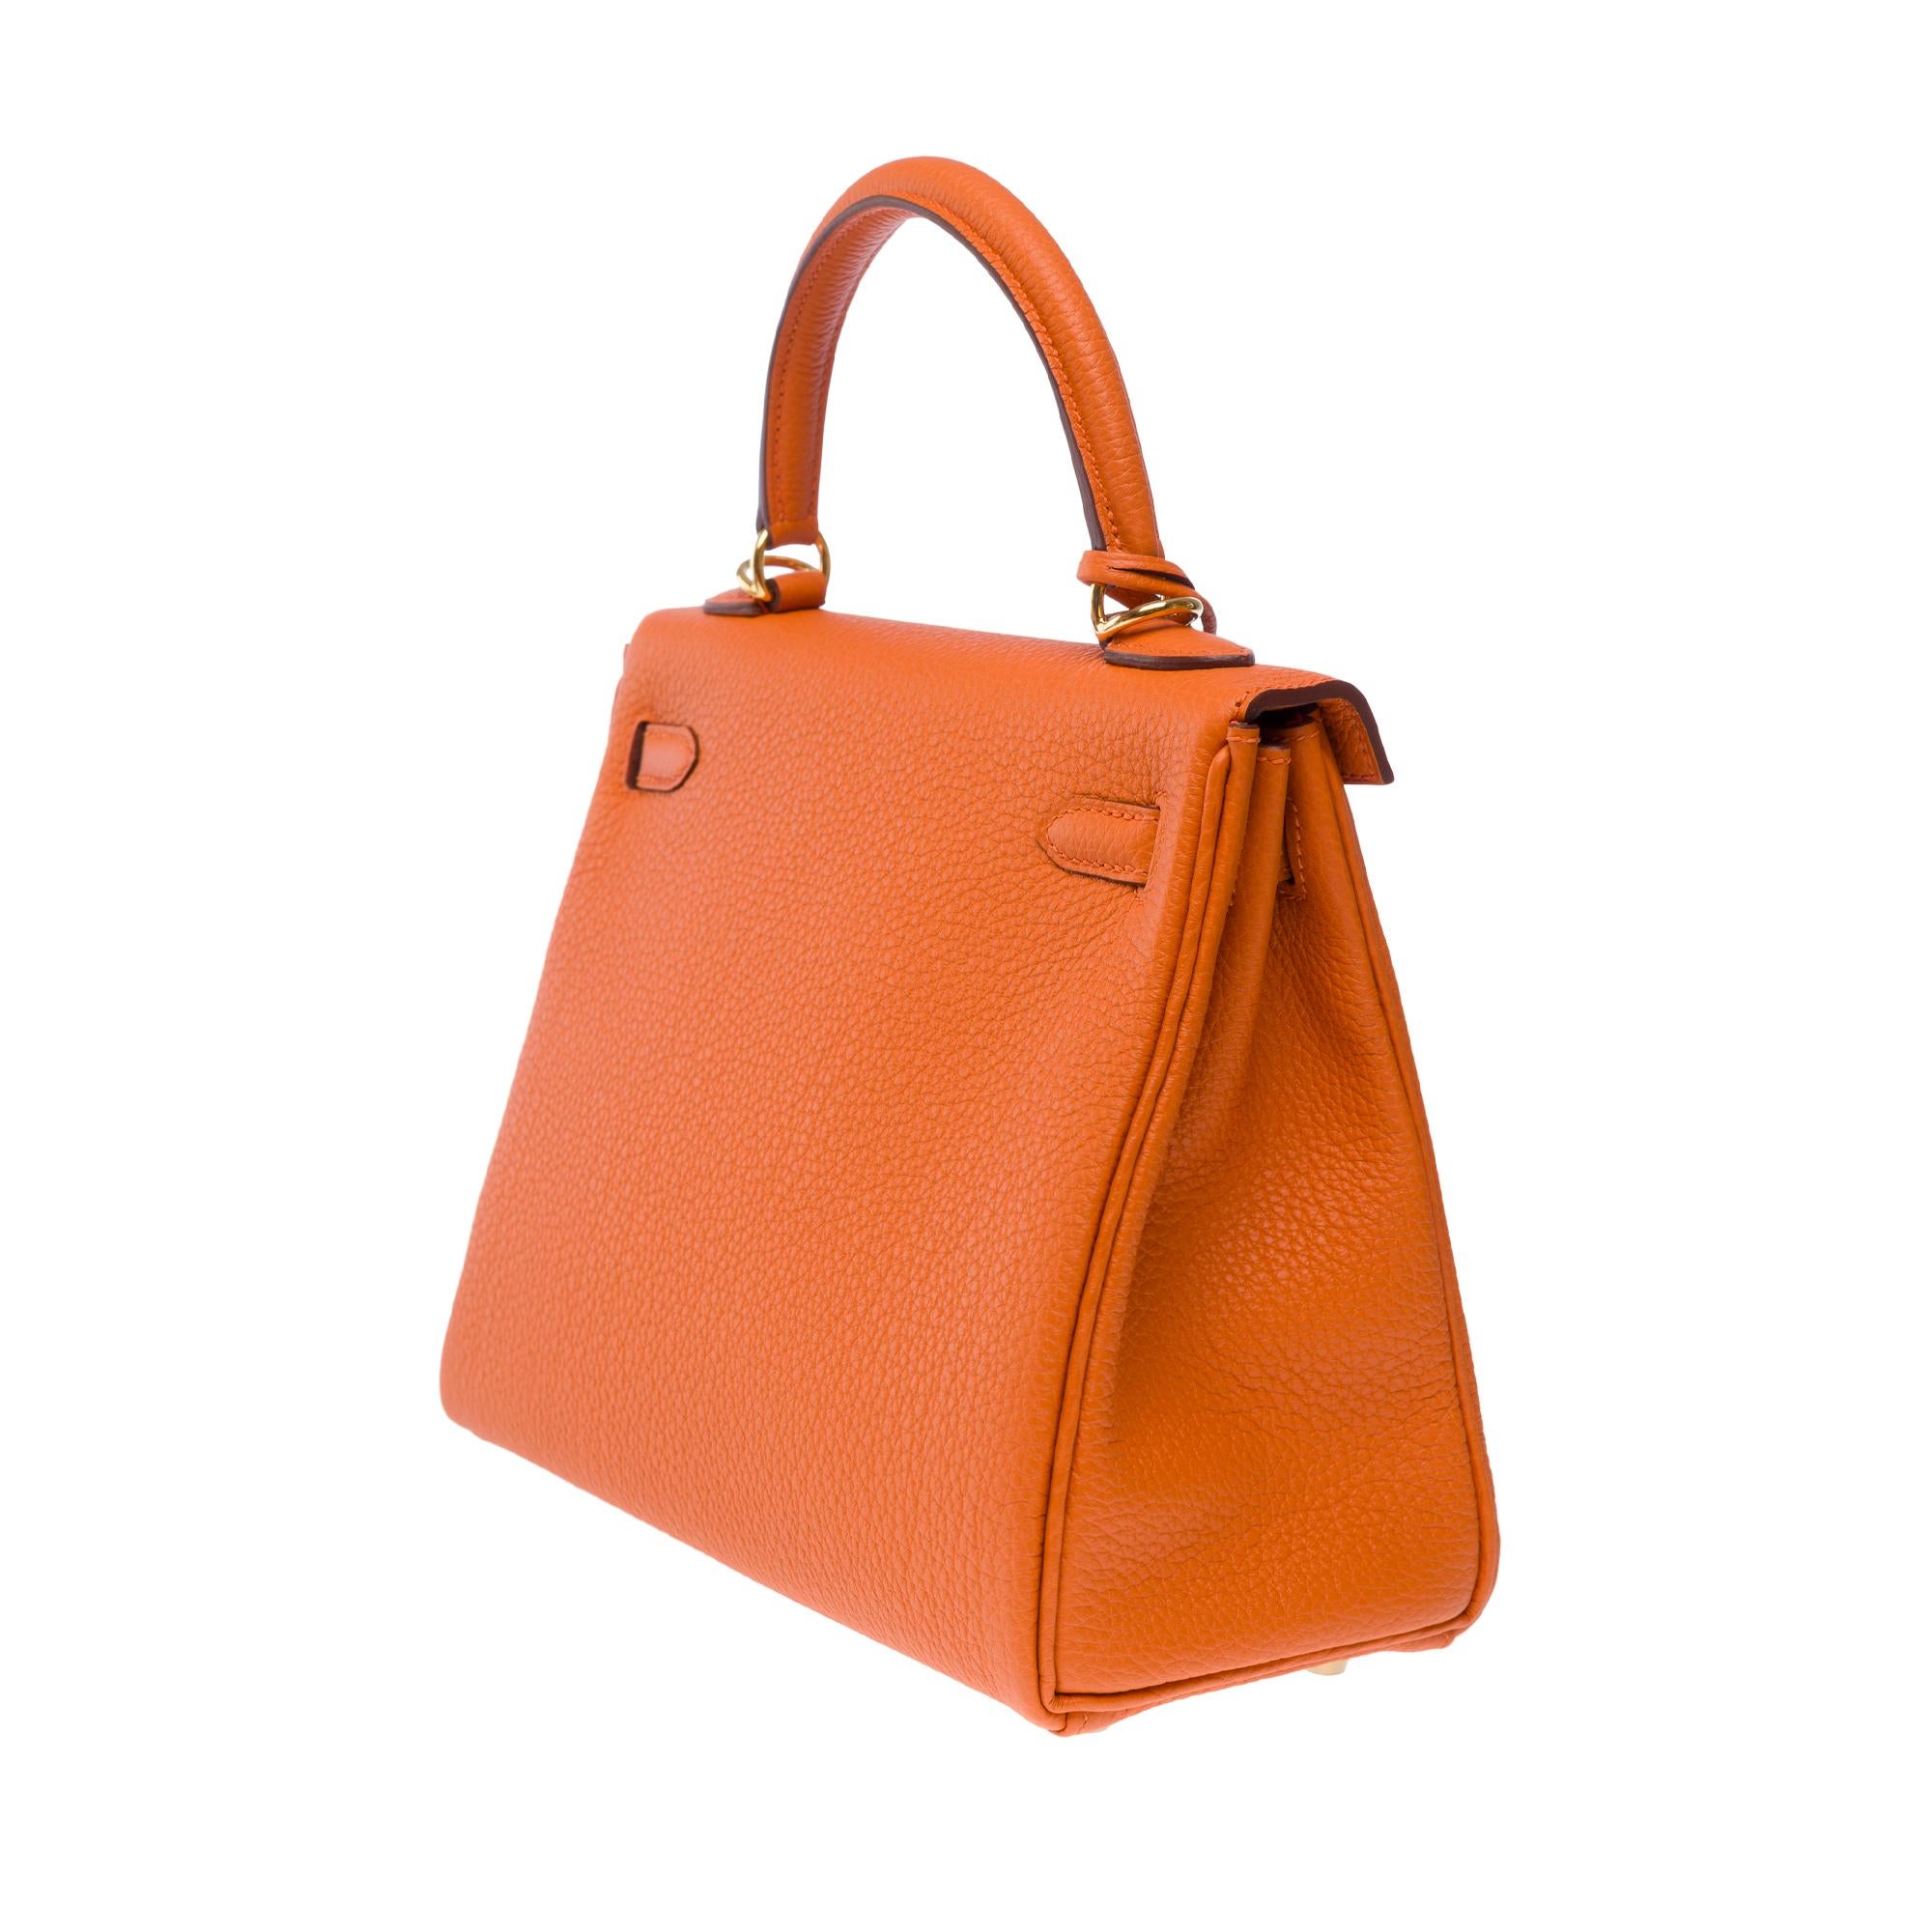 Amazing New Hermès Kelly 25 retourne handbag strap in Orange Togo leather , GHW For Sale 1